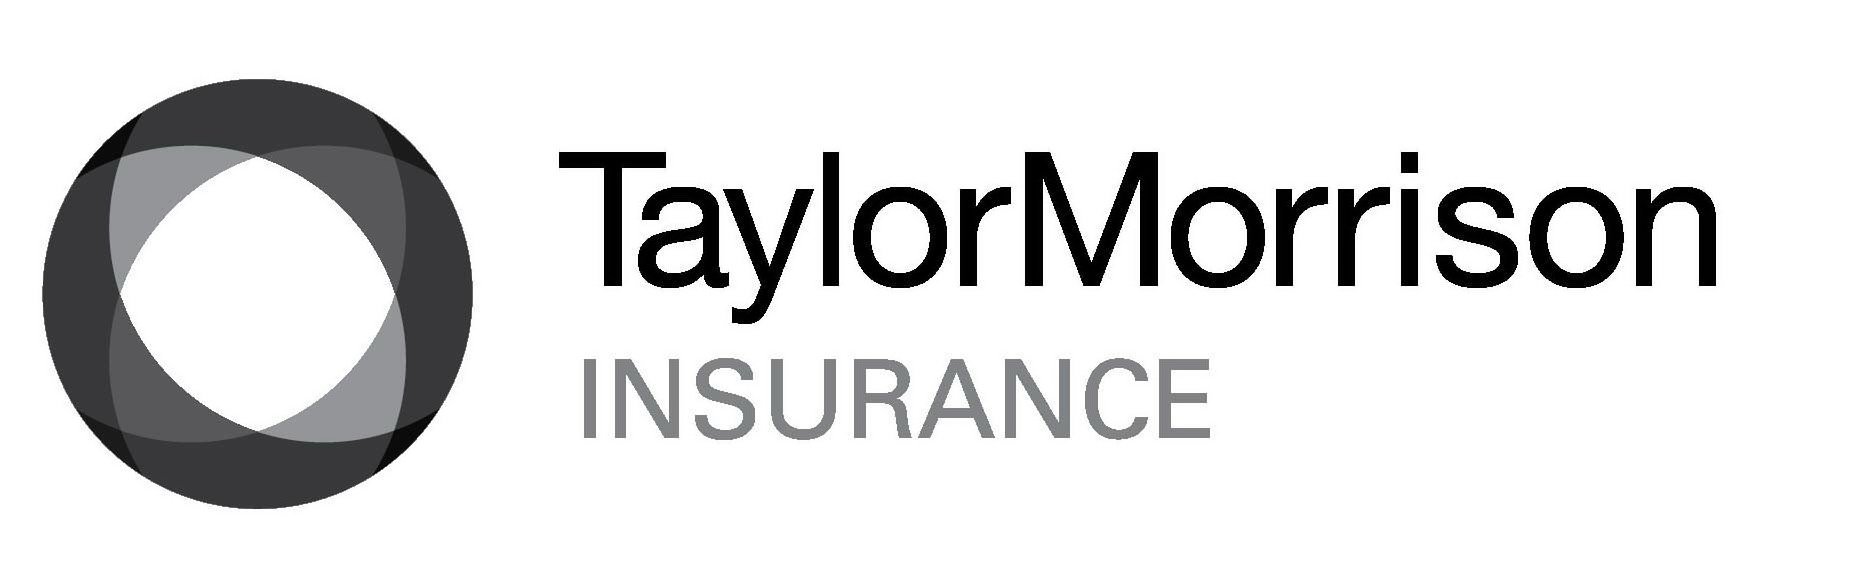 Trademark Logo TAYLOR MORRISON INSURANCE